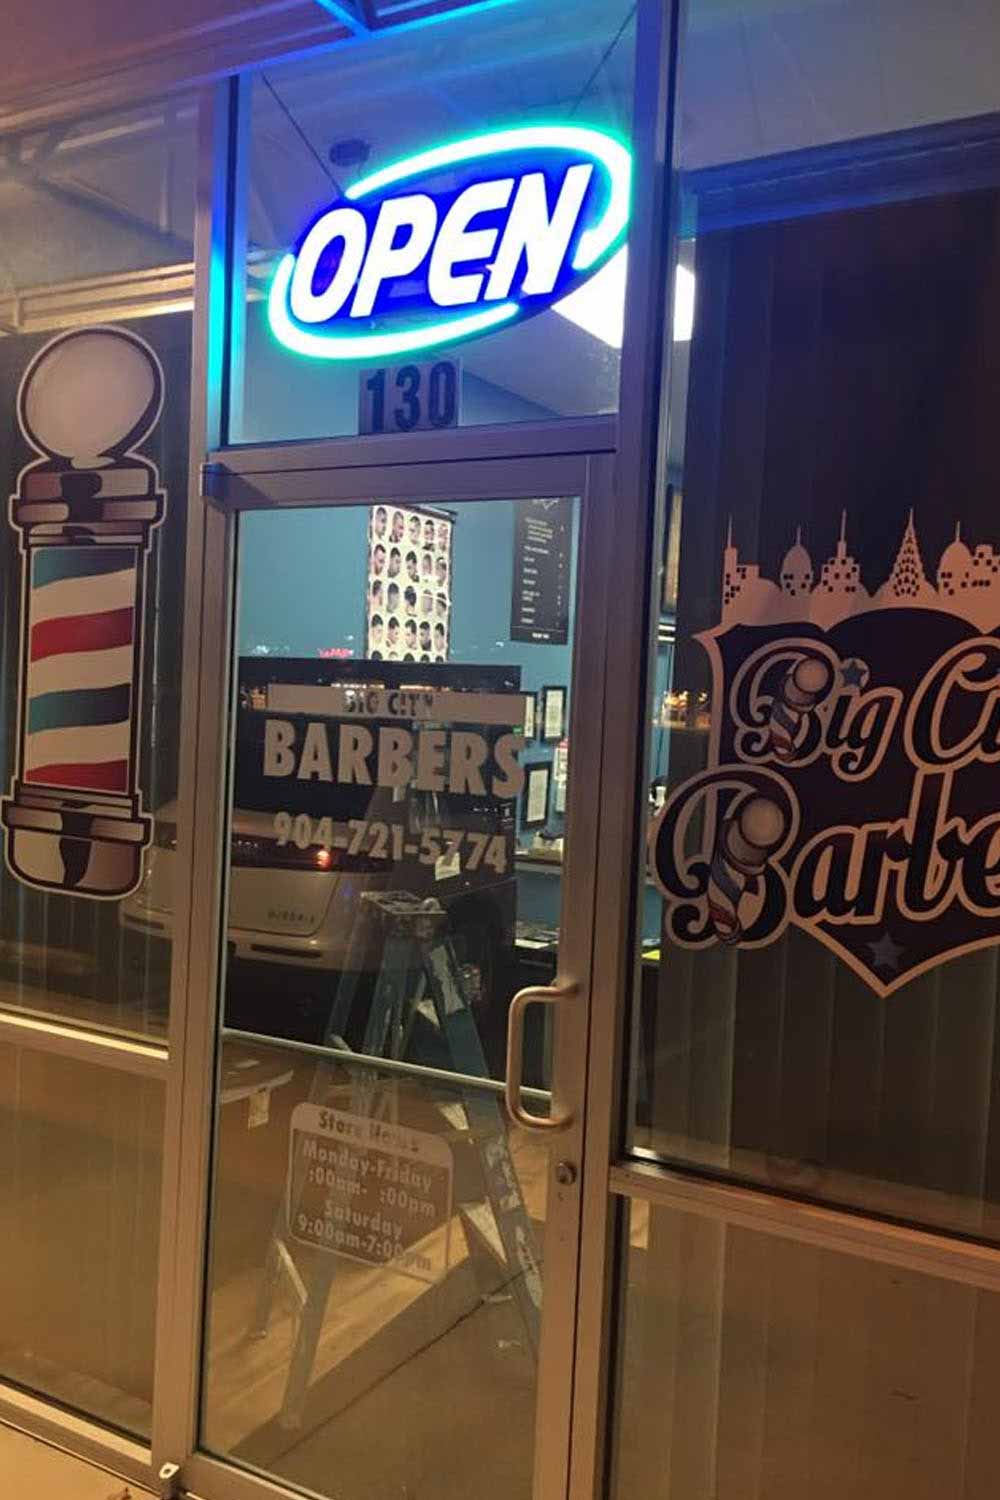 Big City Barbers 2